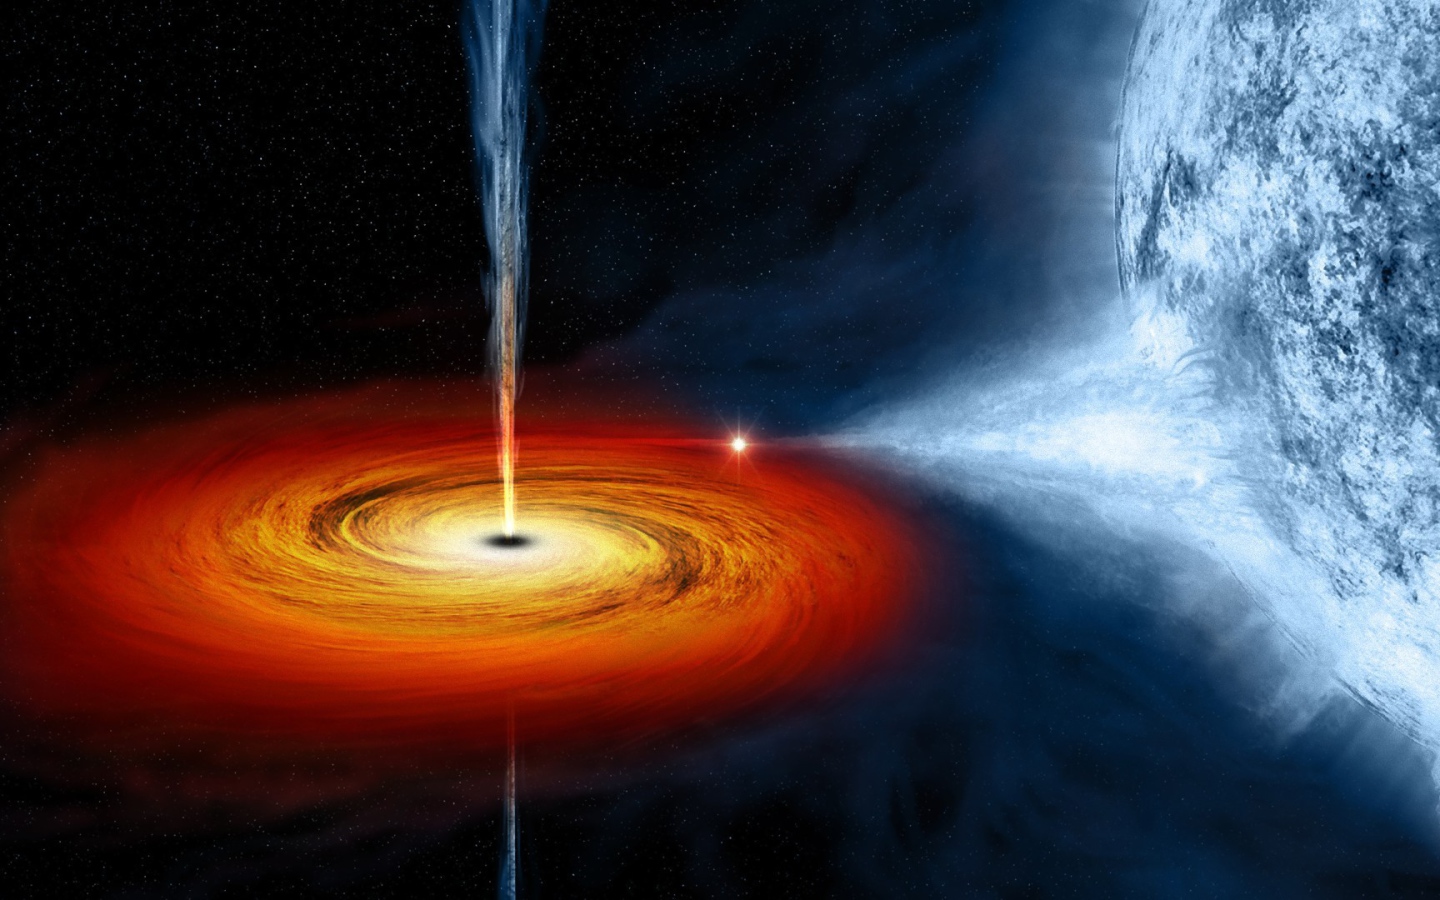 The black hole pulls a blue giant